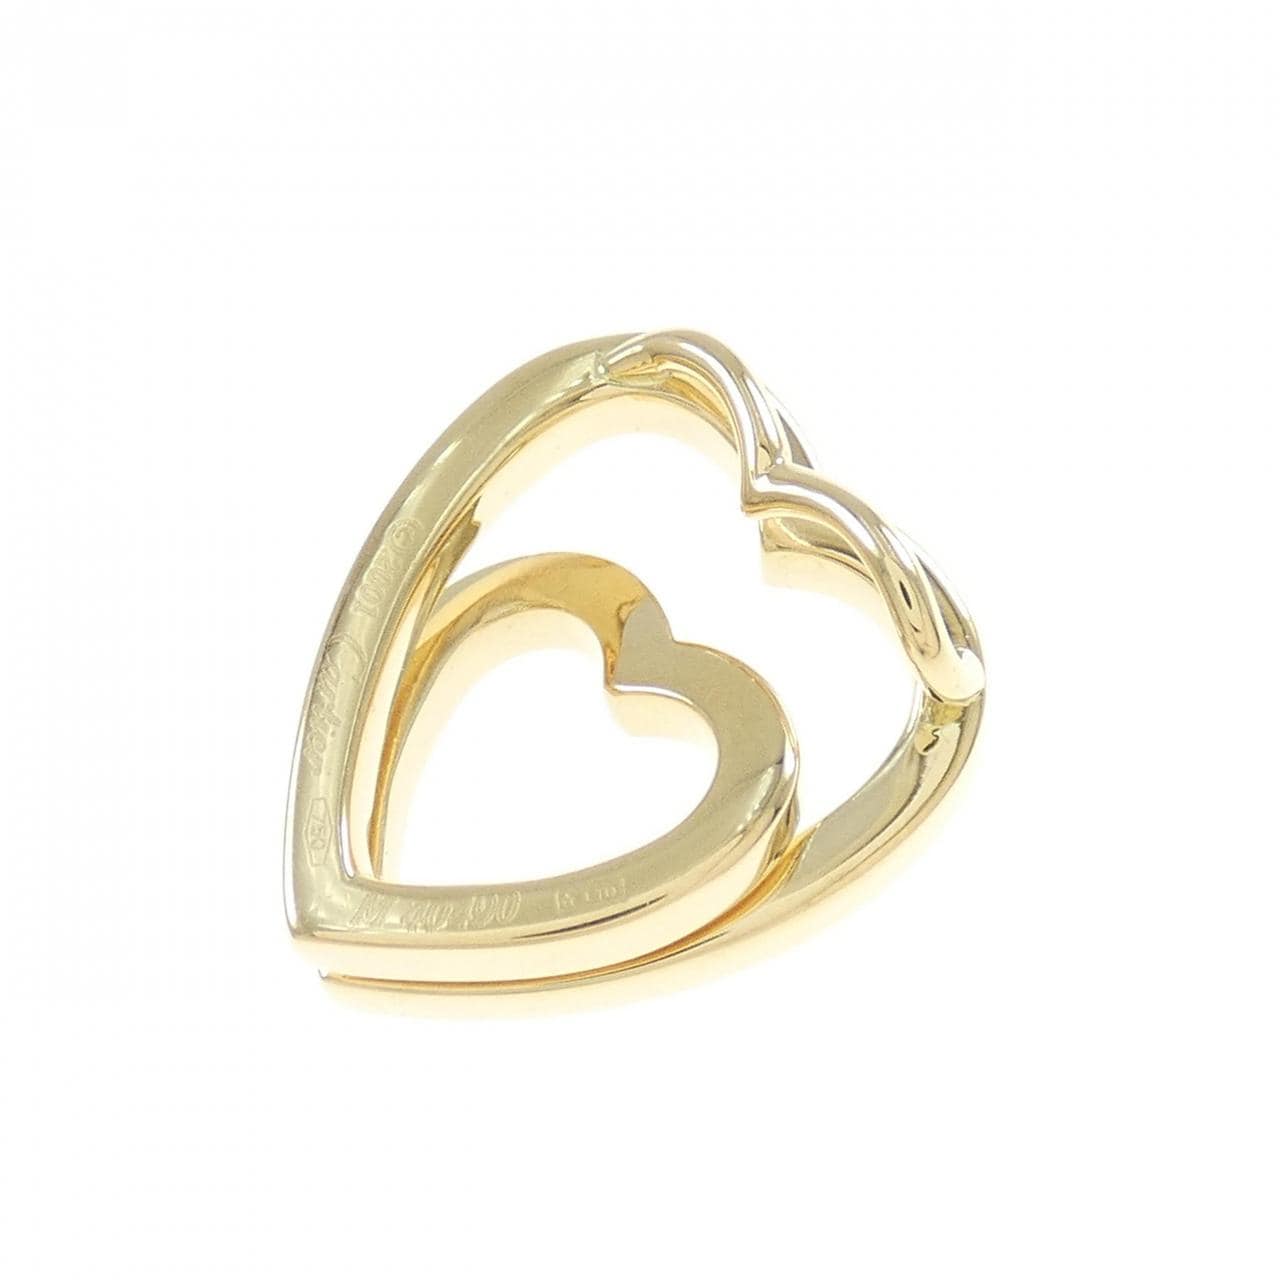 Cartier interlaced heart pendant